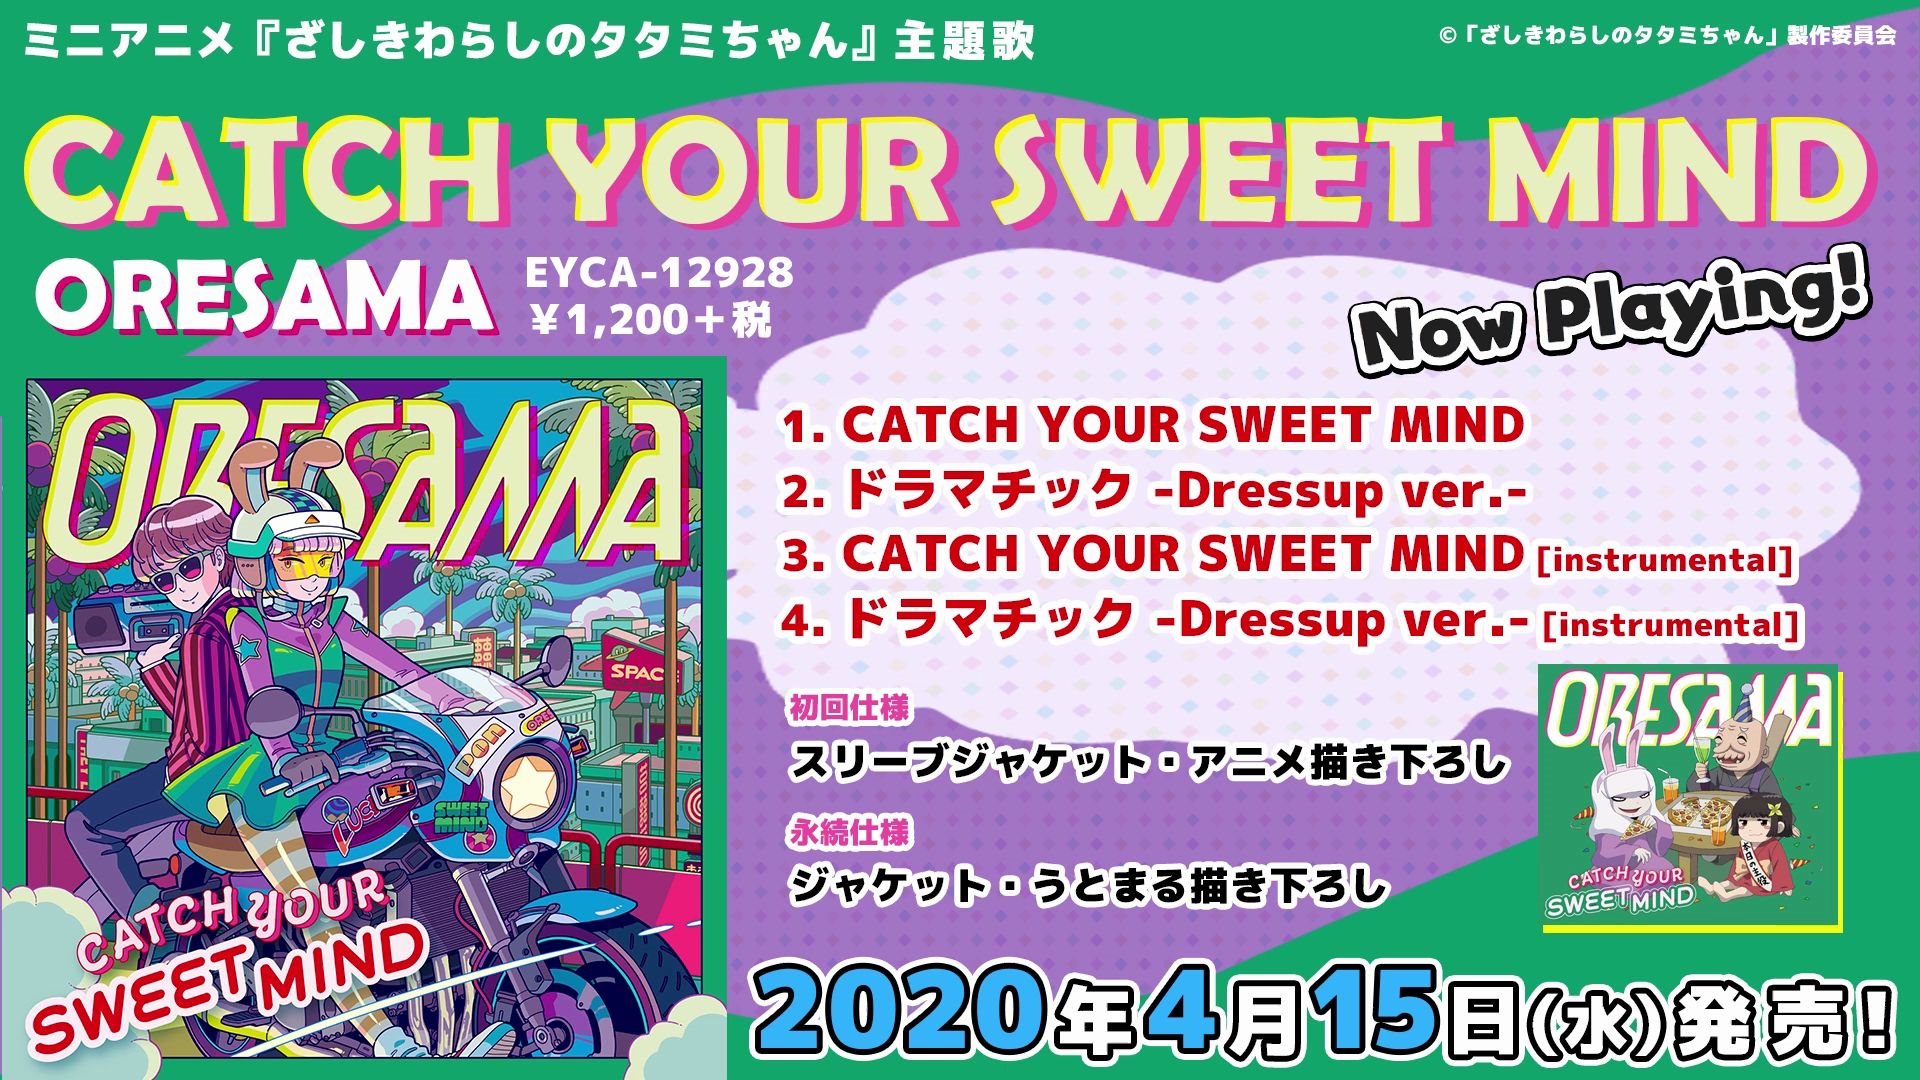 Oresama 8th Single Catch Your Sweet Mind 试听 哔哩哔哩 つロ干杯 Bilibili